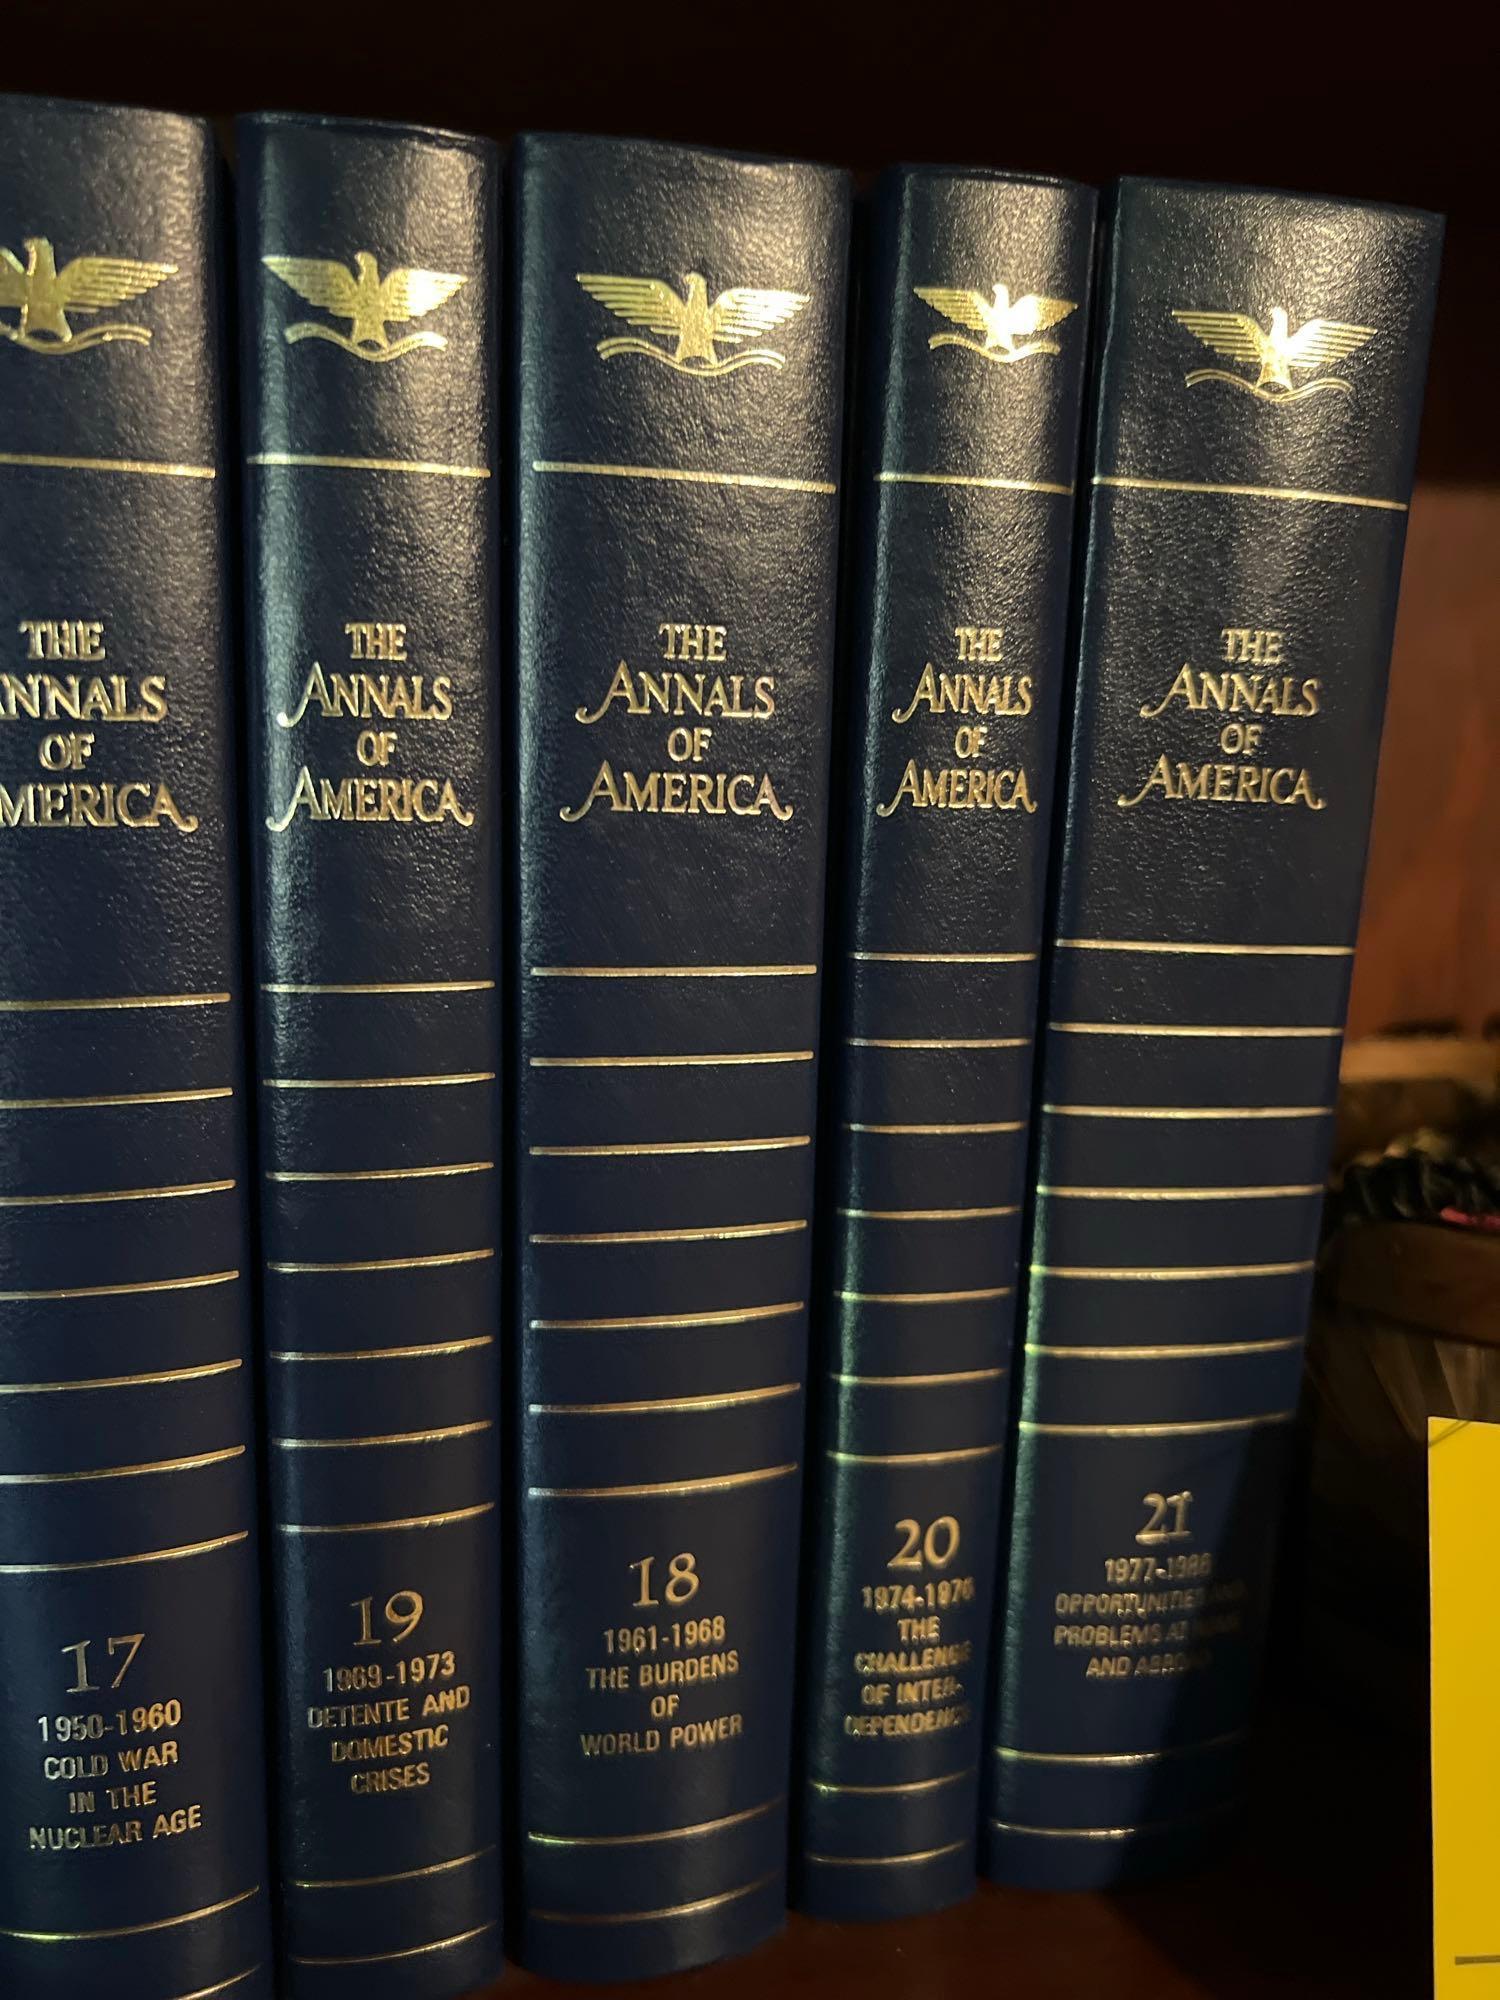 Vintage Encyclopedias and Books